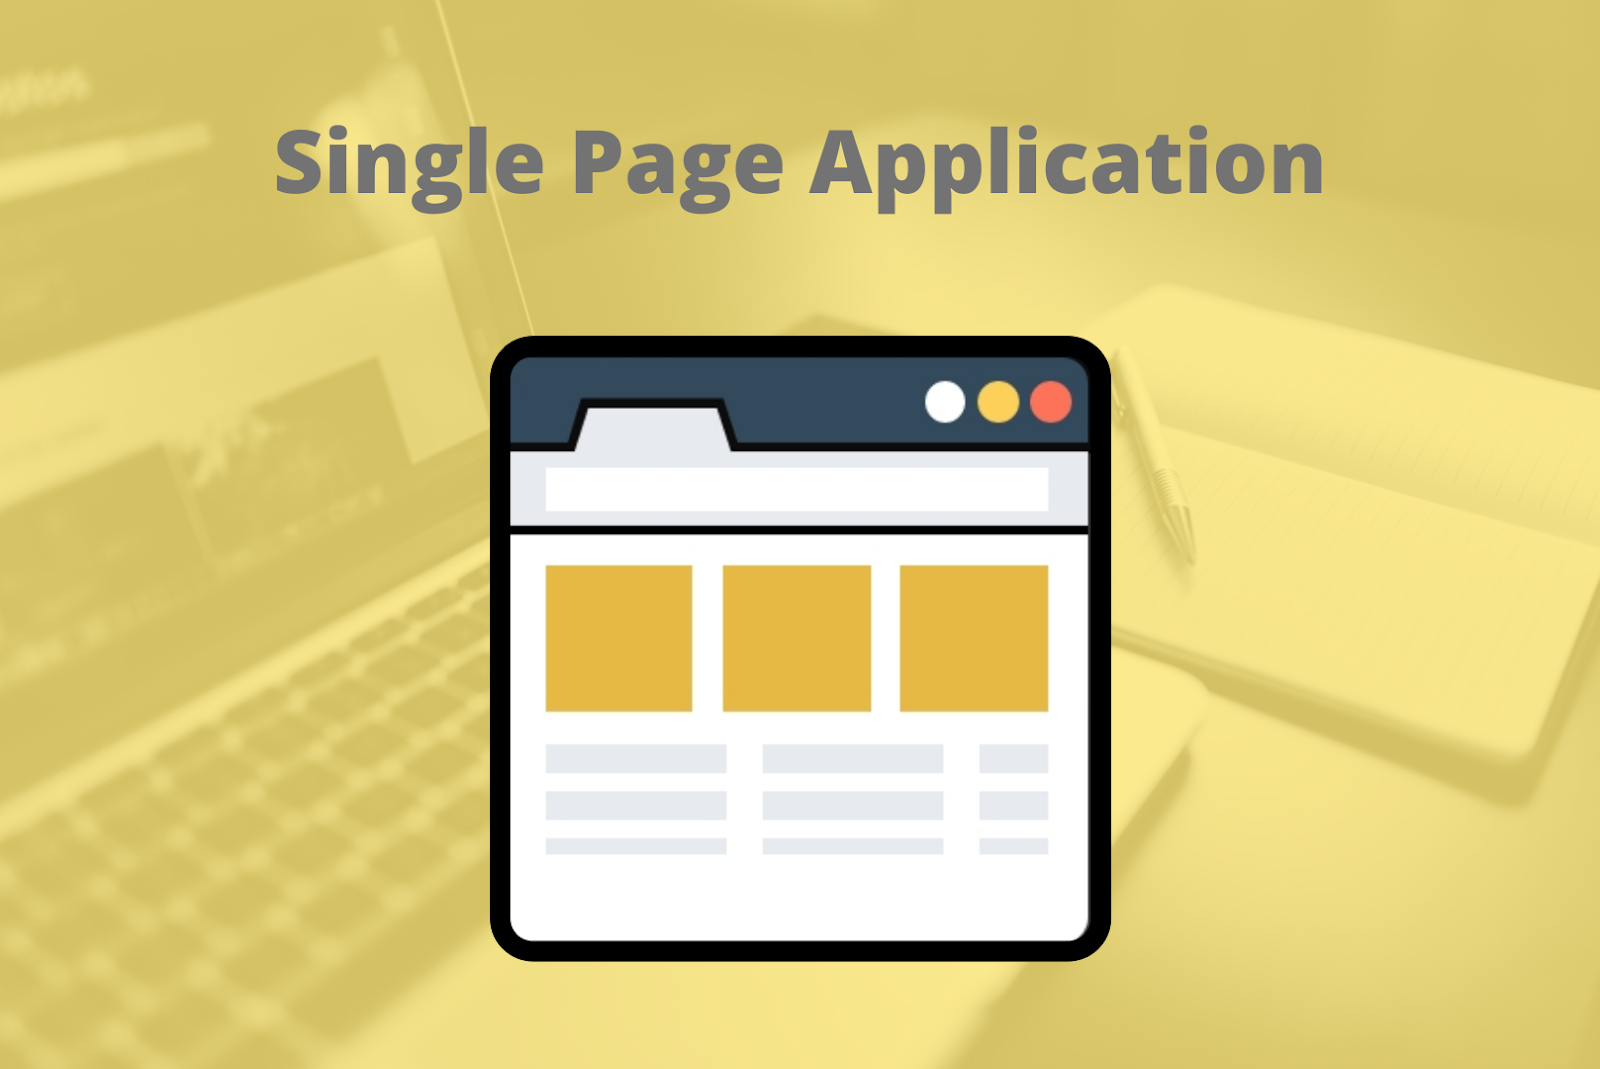 Node.js single page application